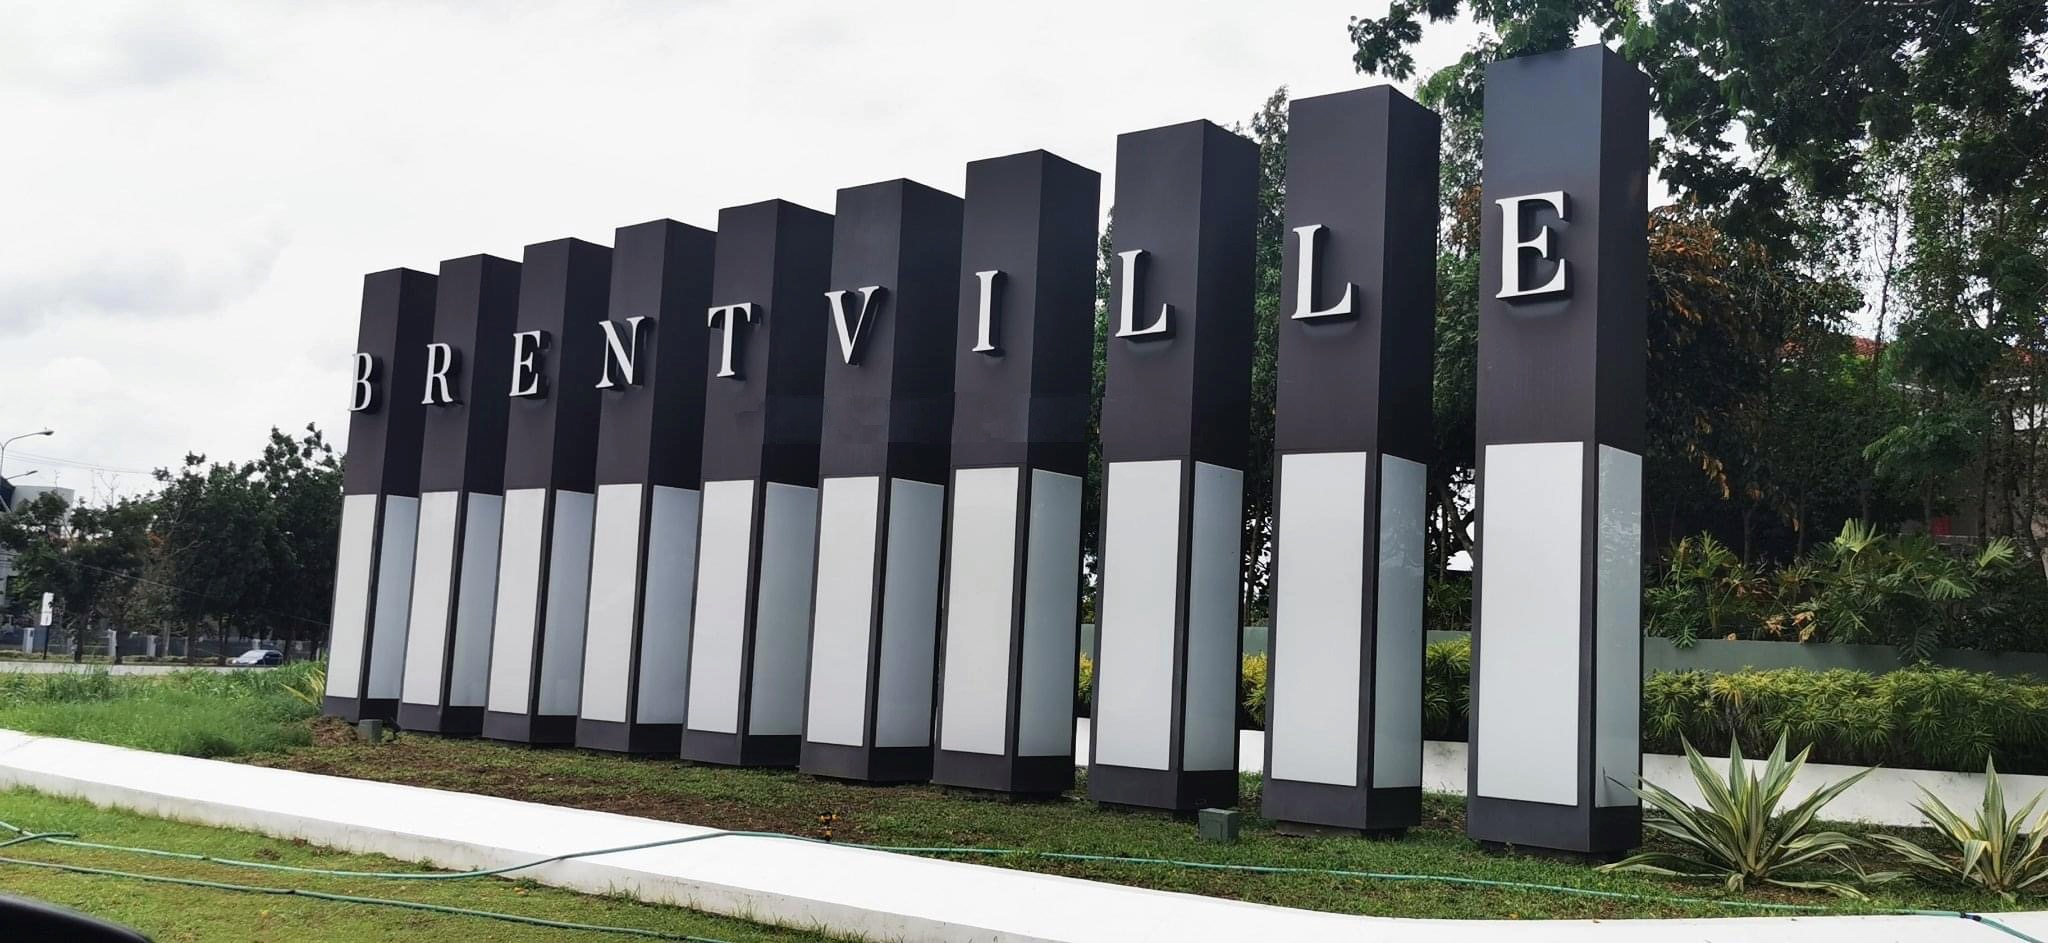 Brentville International Community, Meridien – Prime Lot for Sale‼️